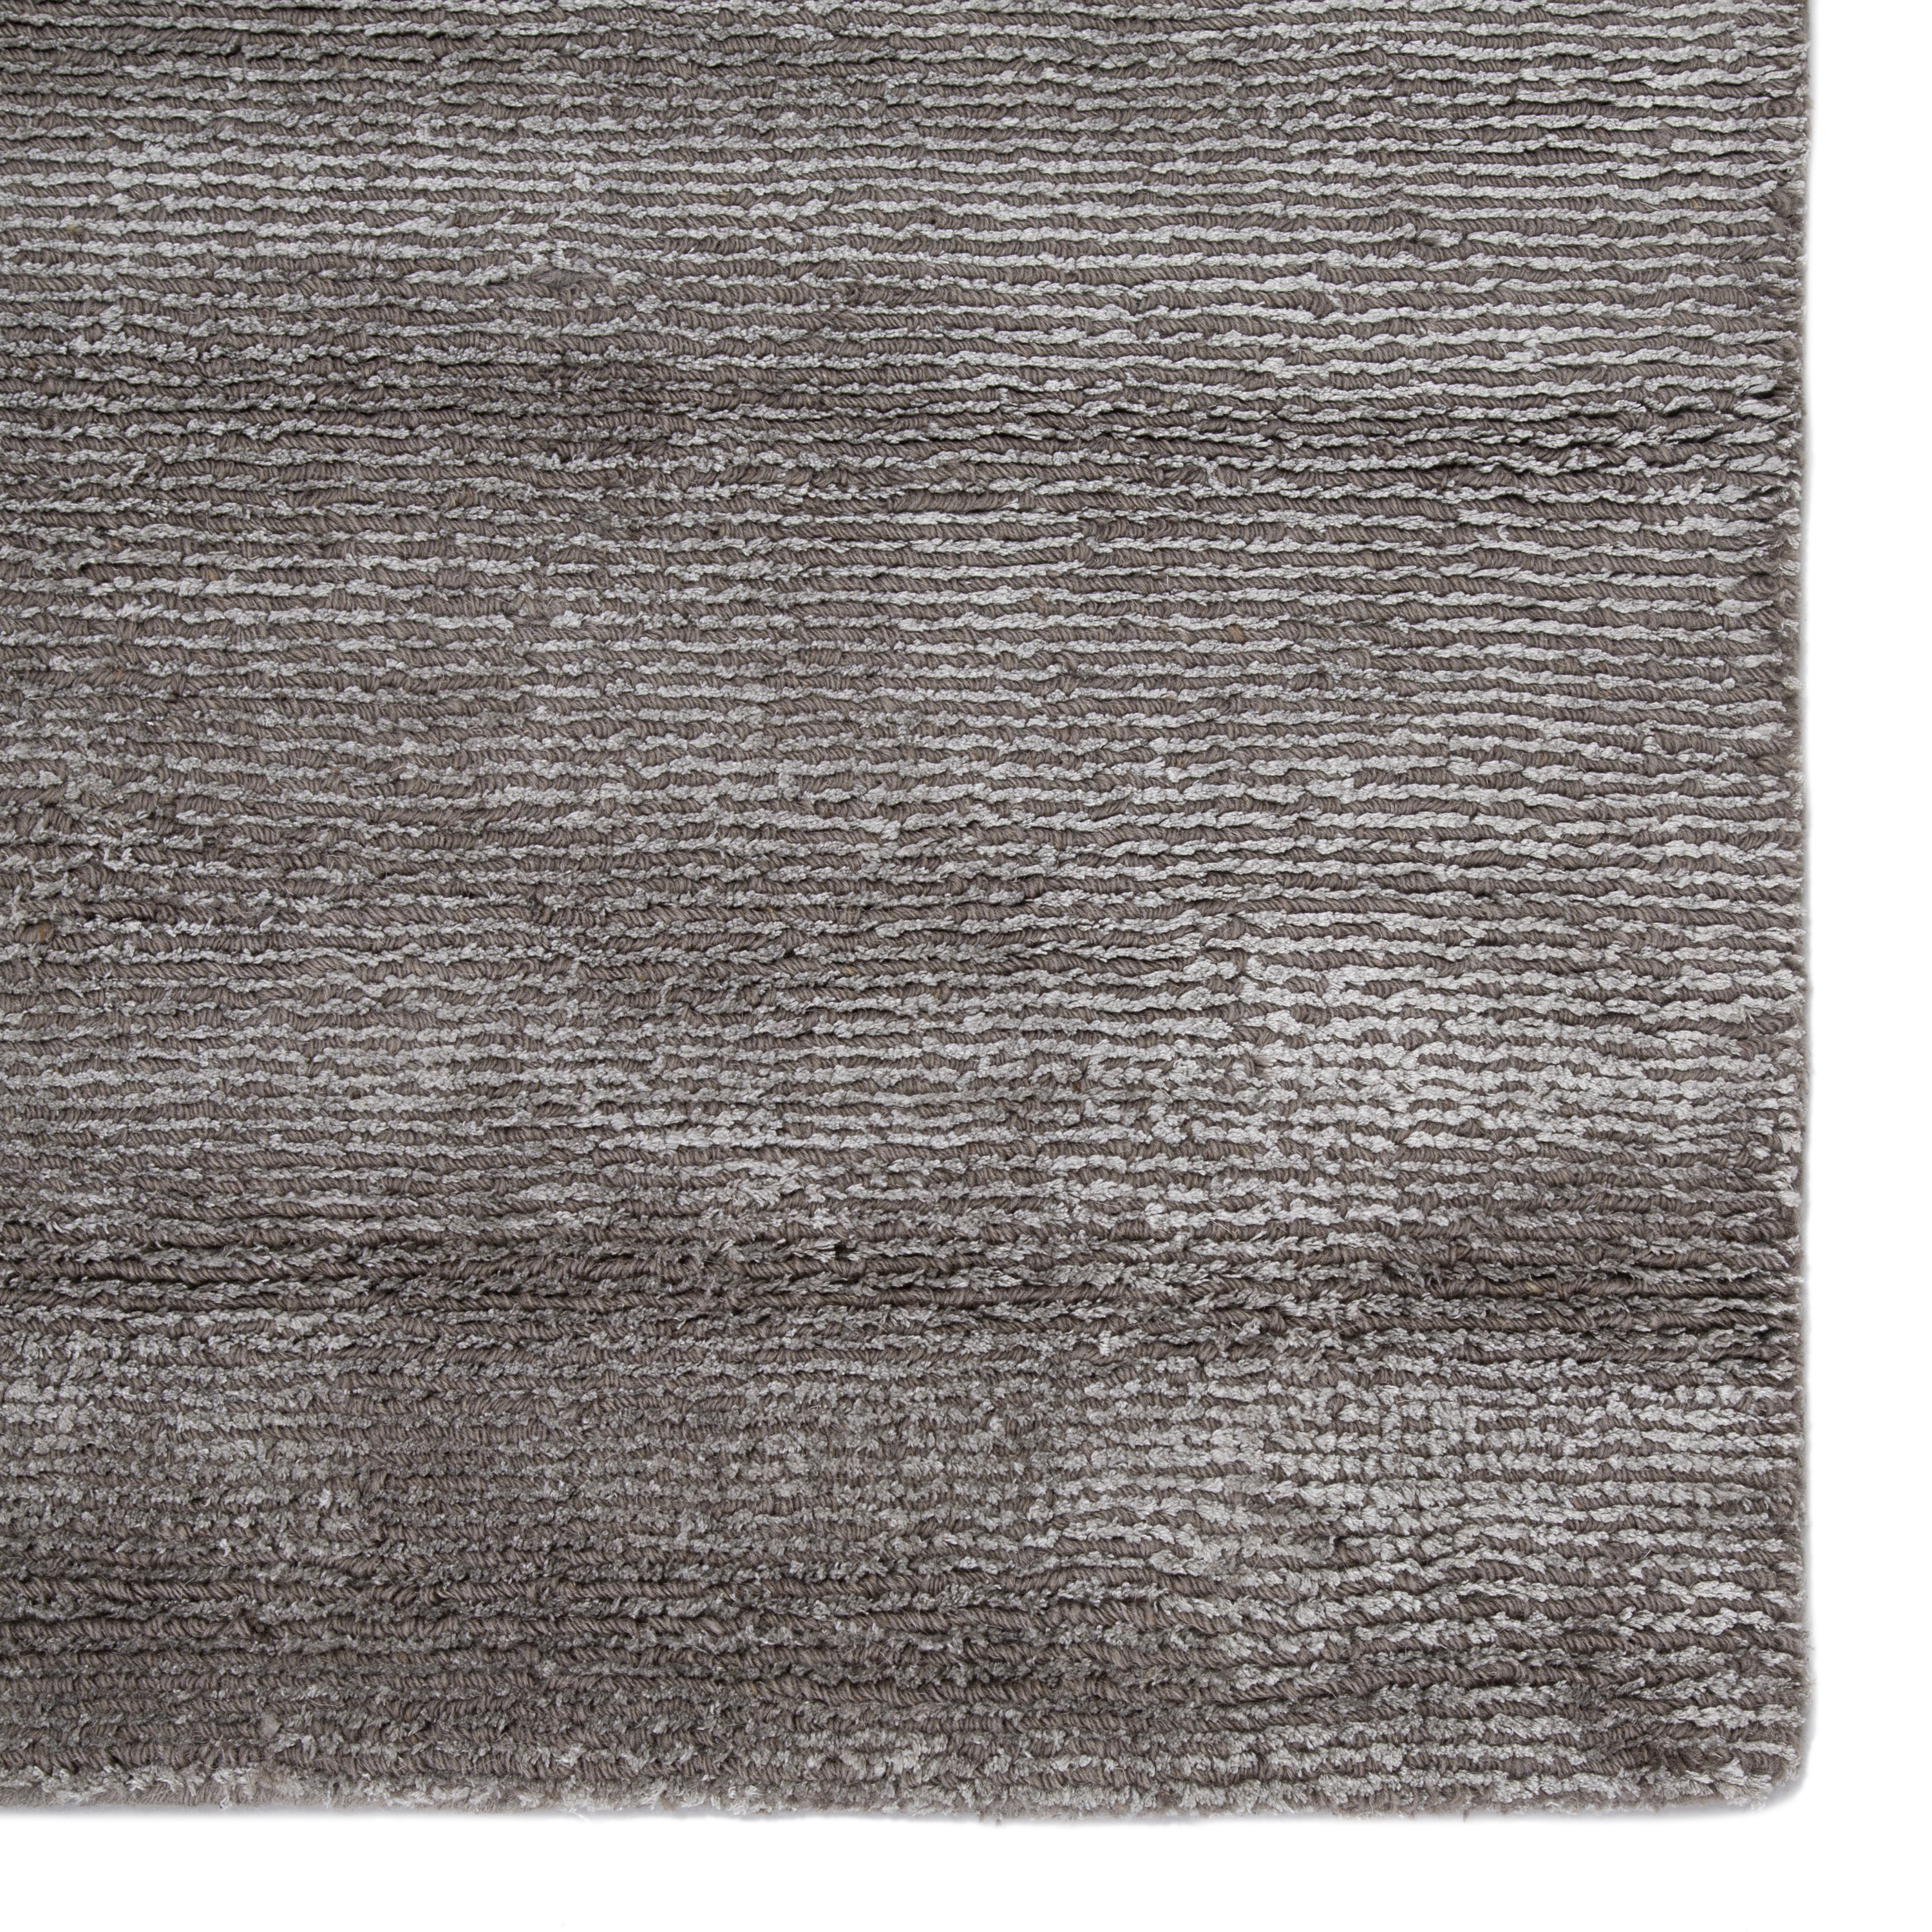 Kelle Handmade Solid Gray/ Silver Area Rug (5' X 8') - Image 3